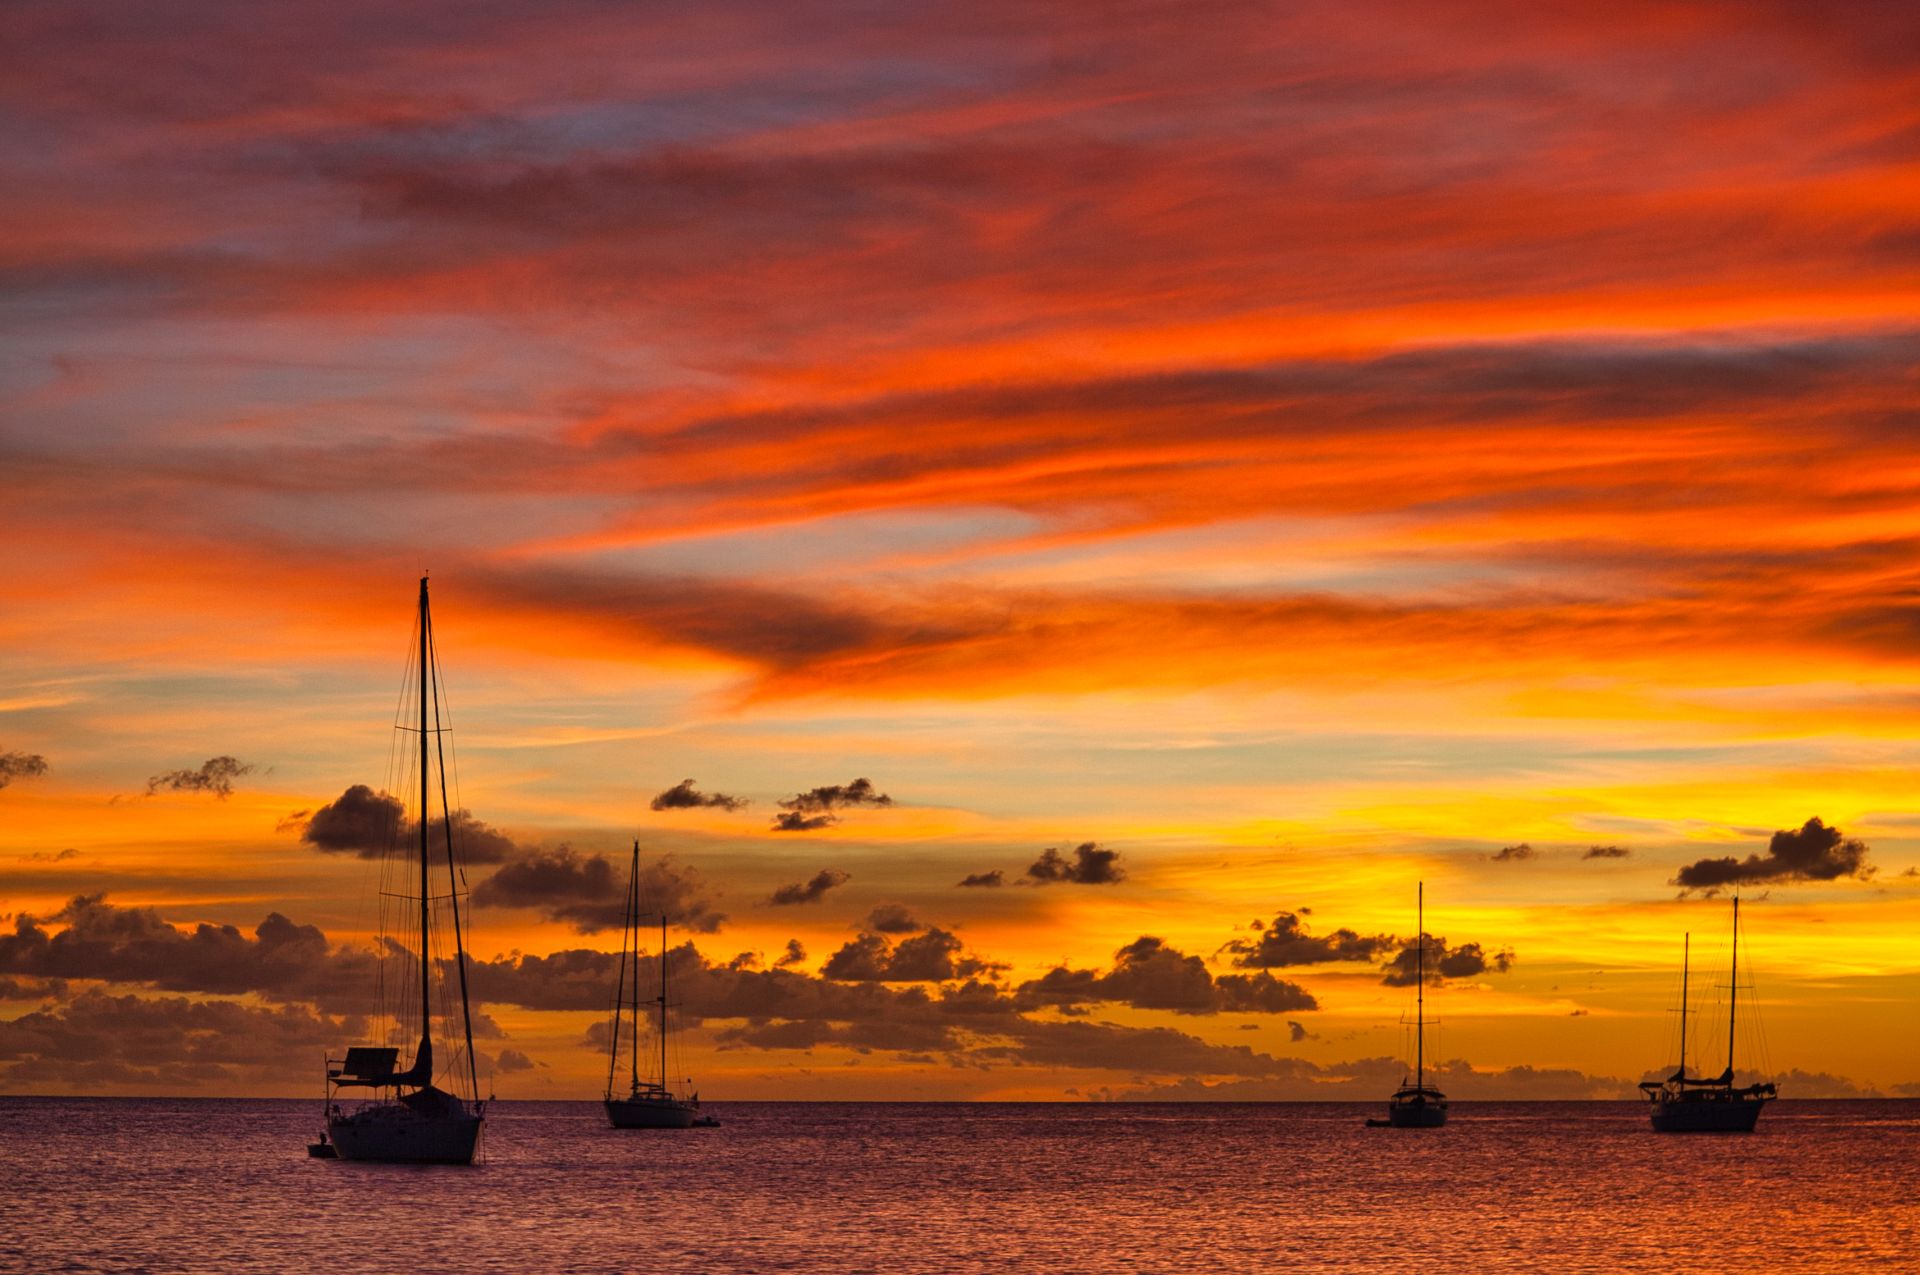 Martinique - Fort de France - Sailing Boats at Caribbean Sunset